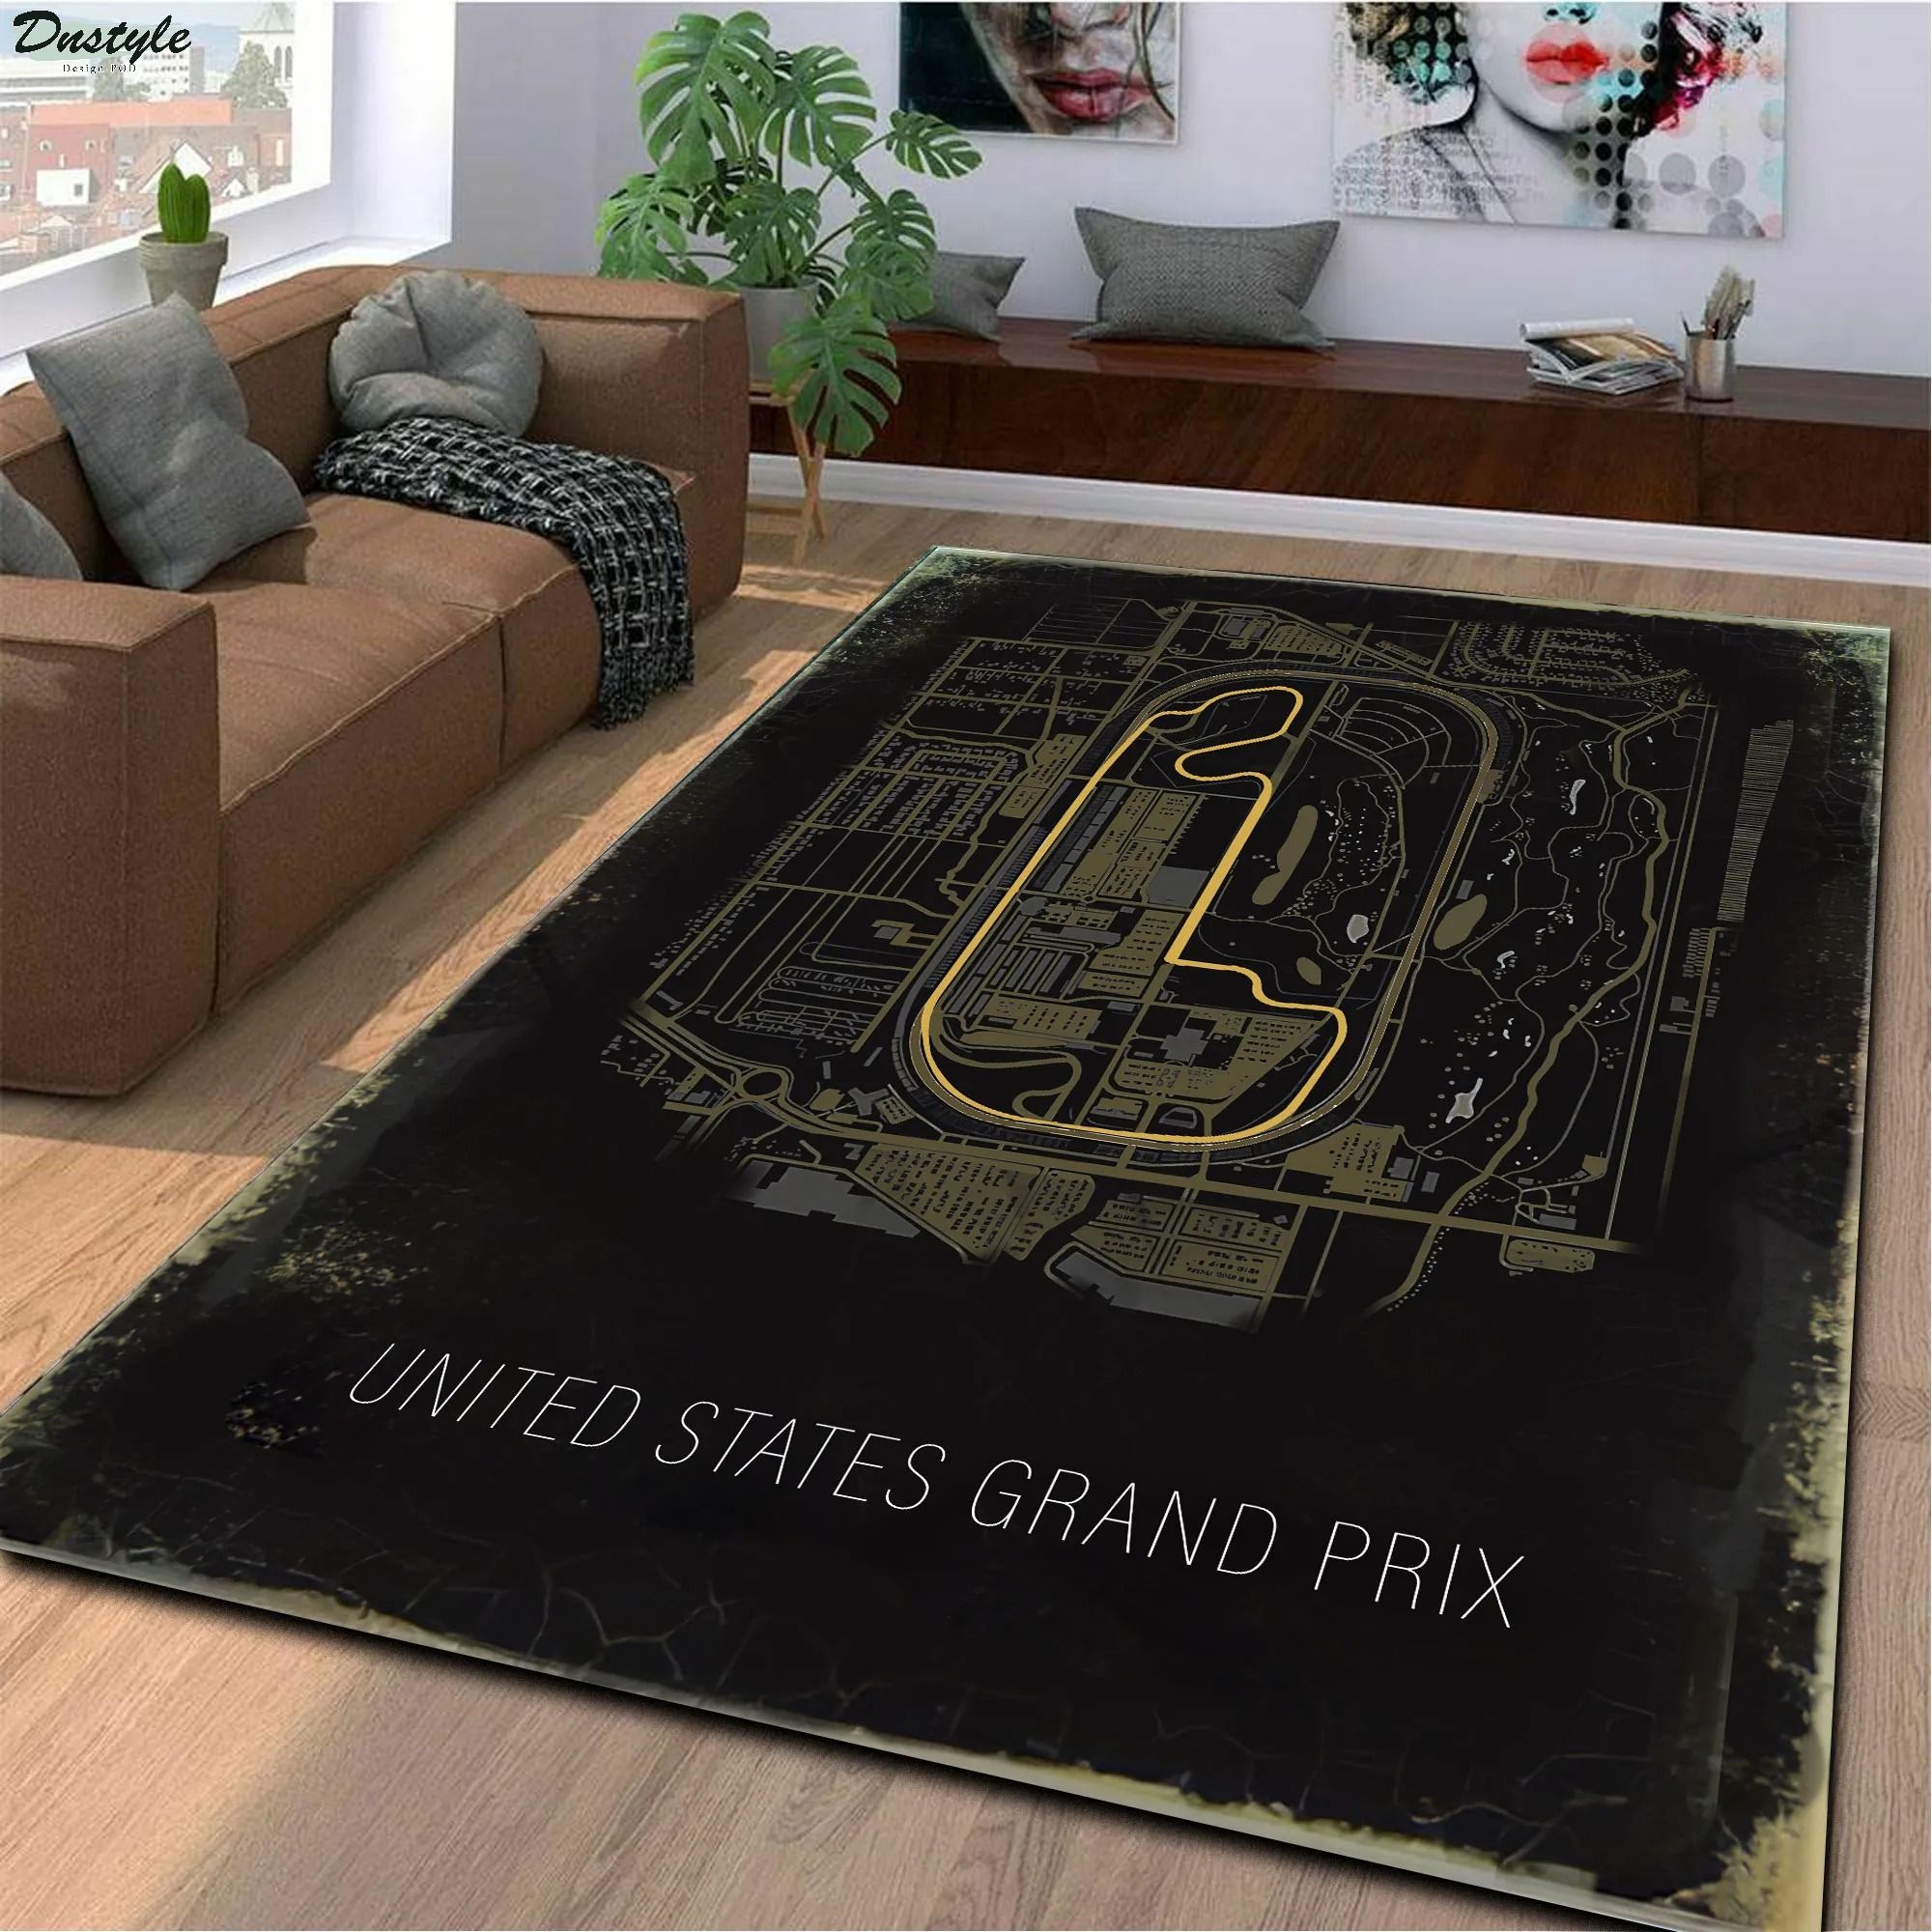 United states grand prix f1 track rug